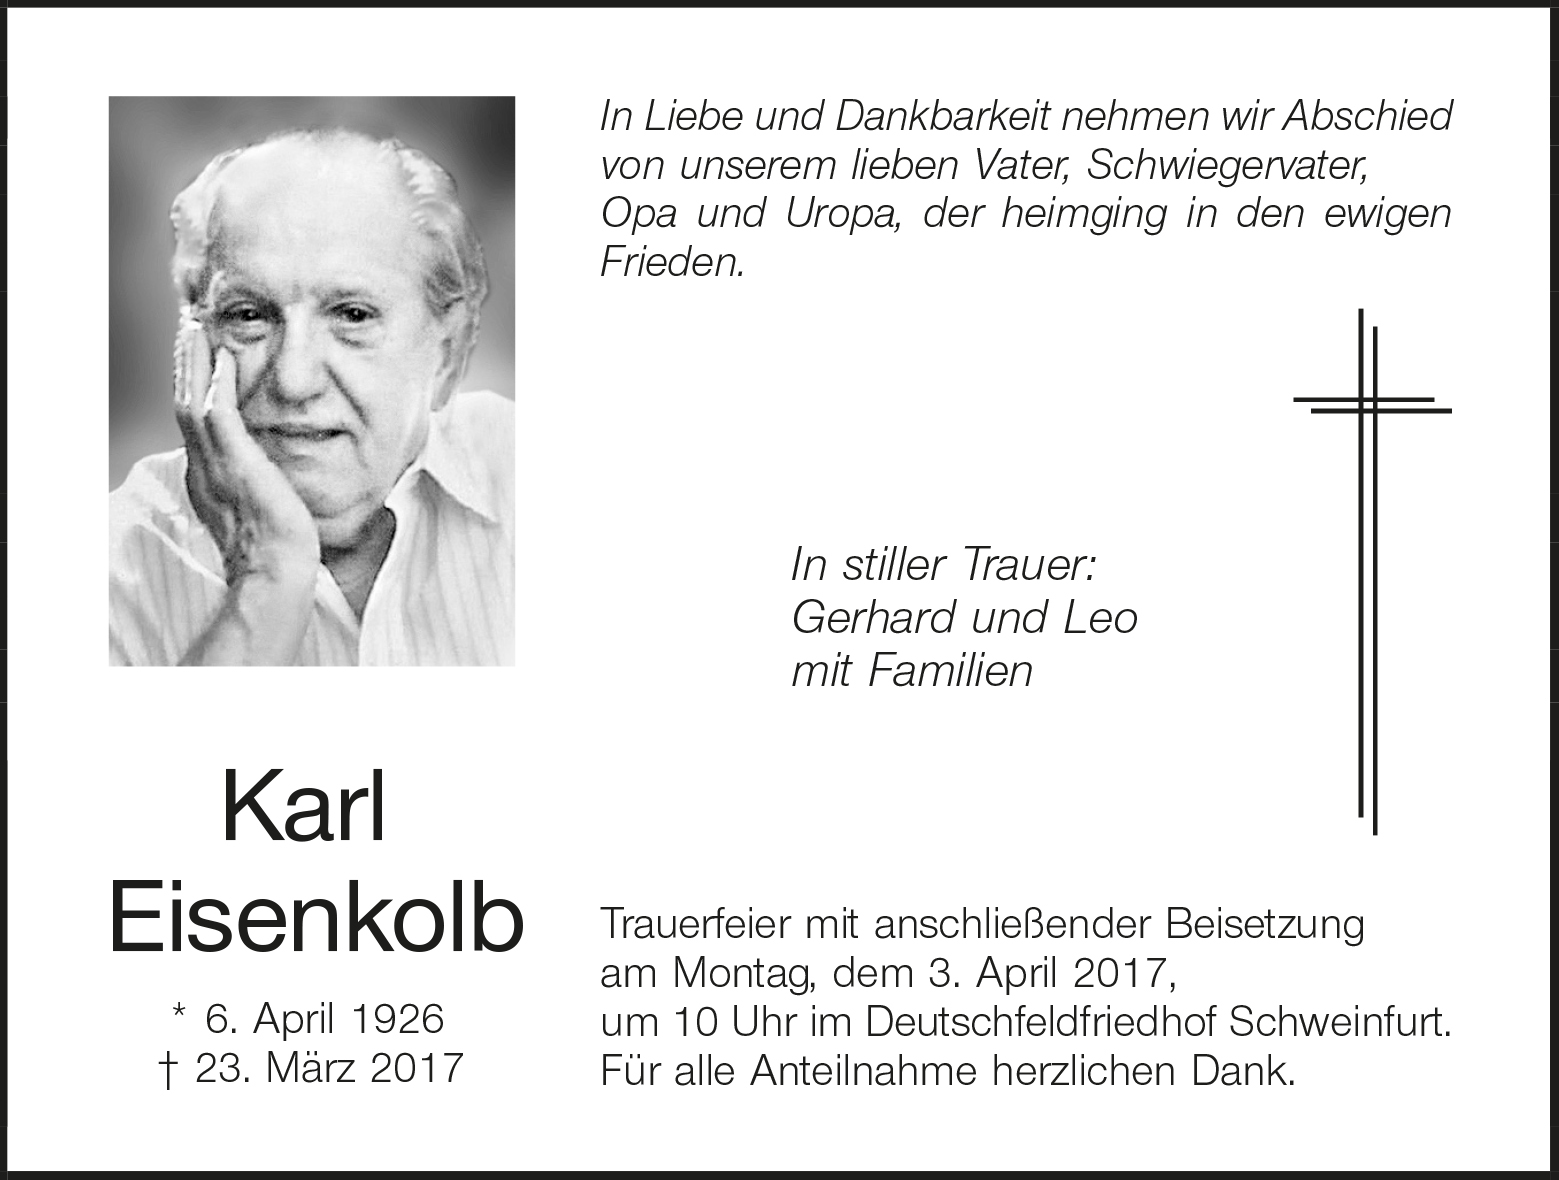 Karl Eisenkolb